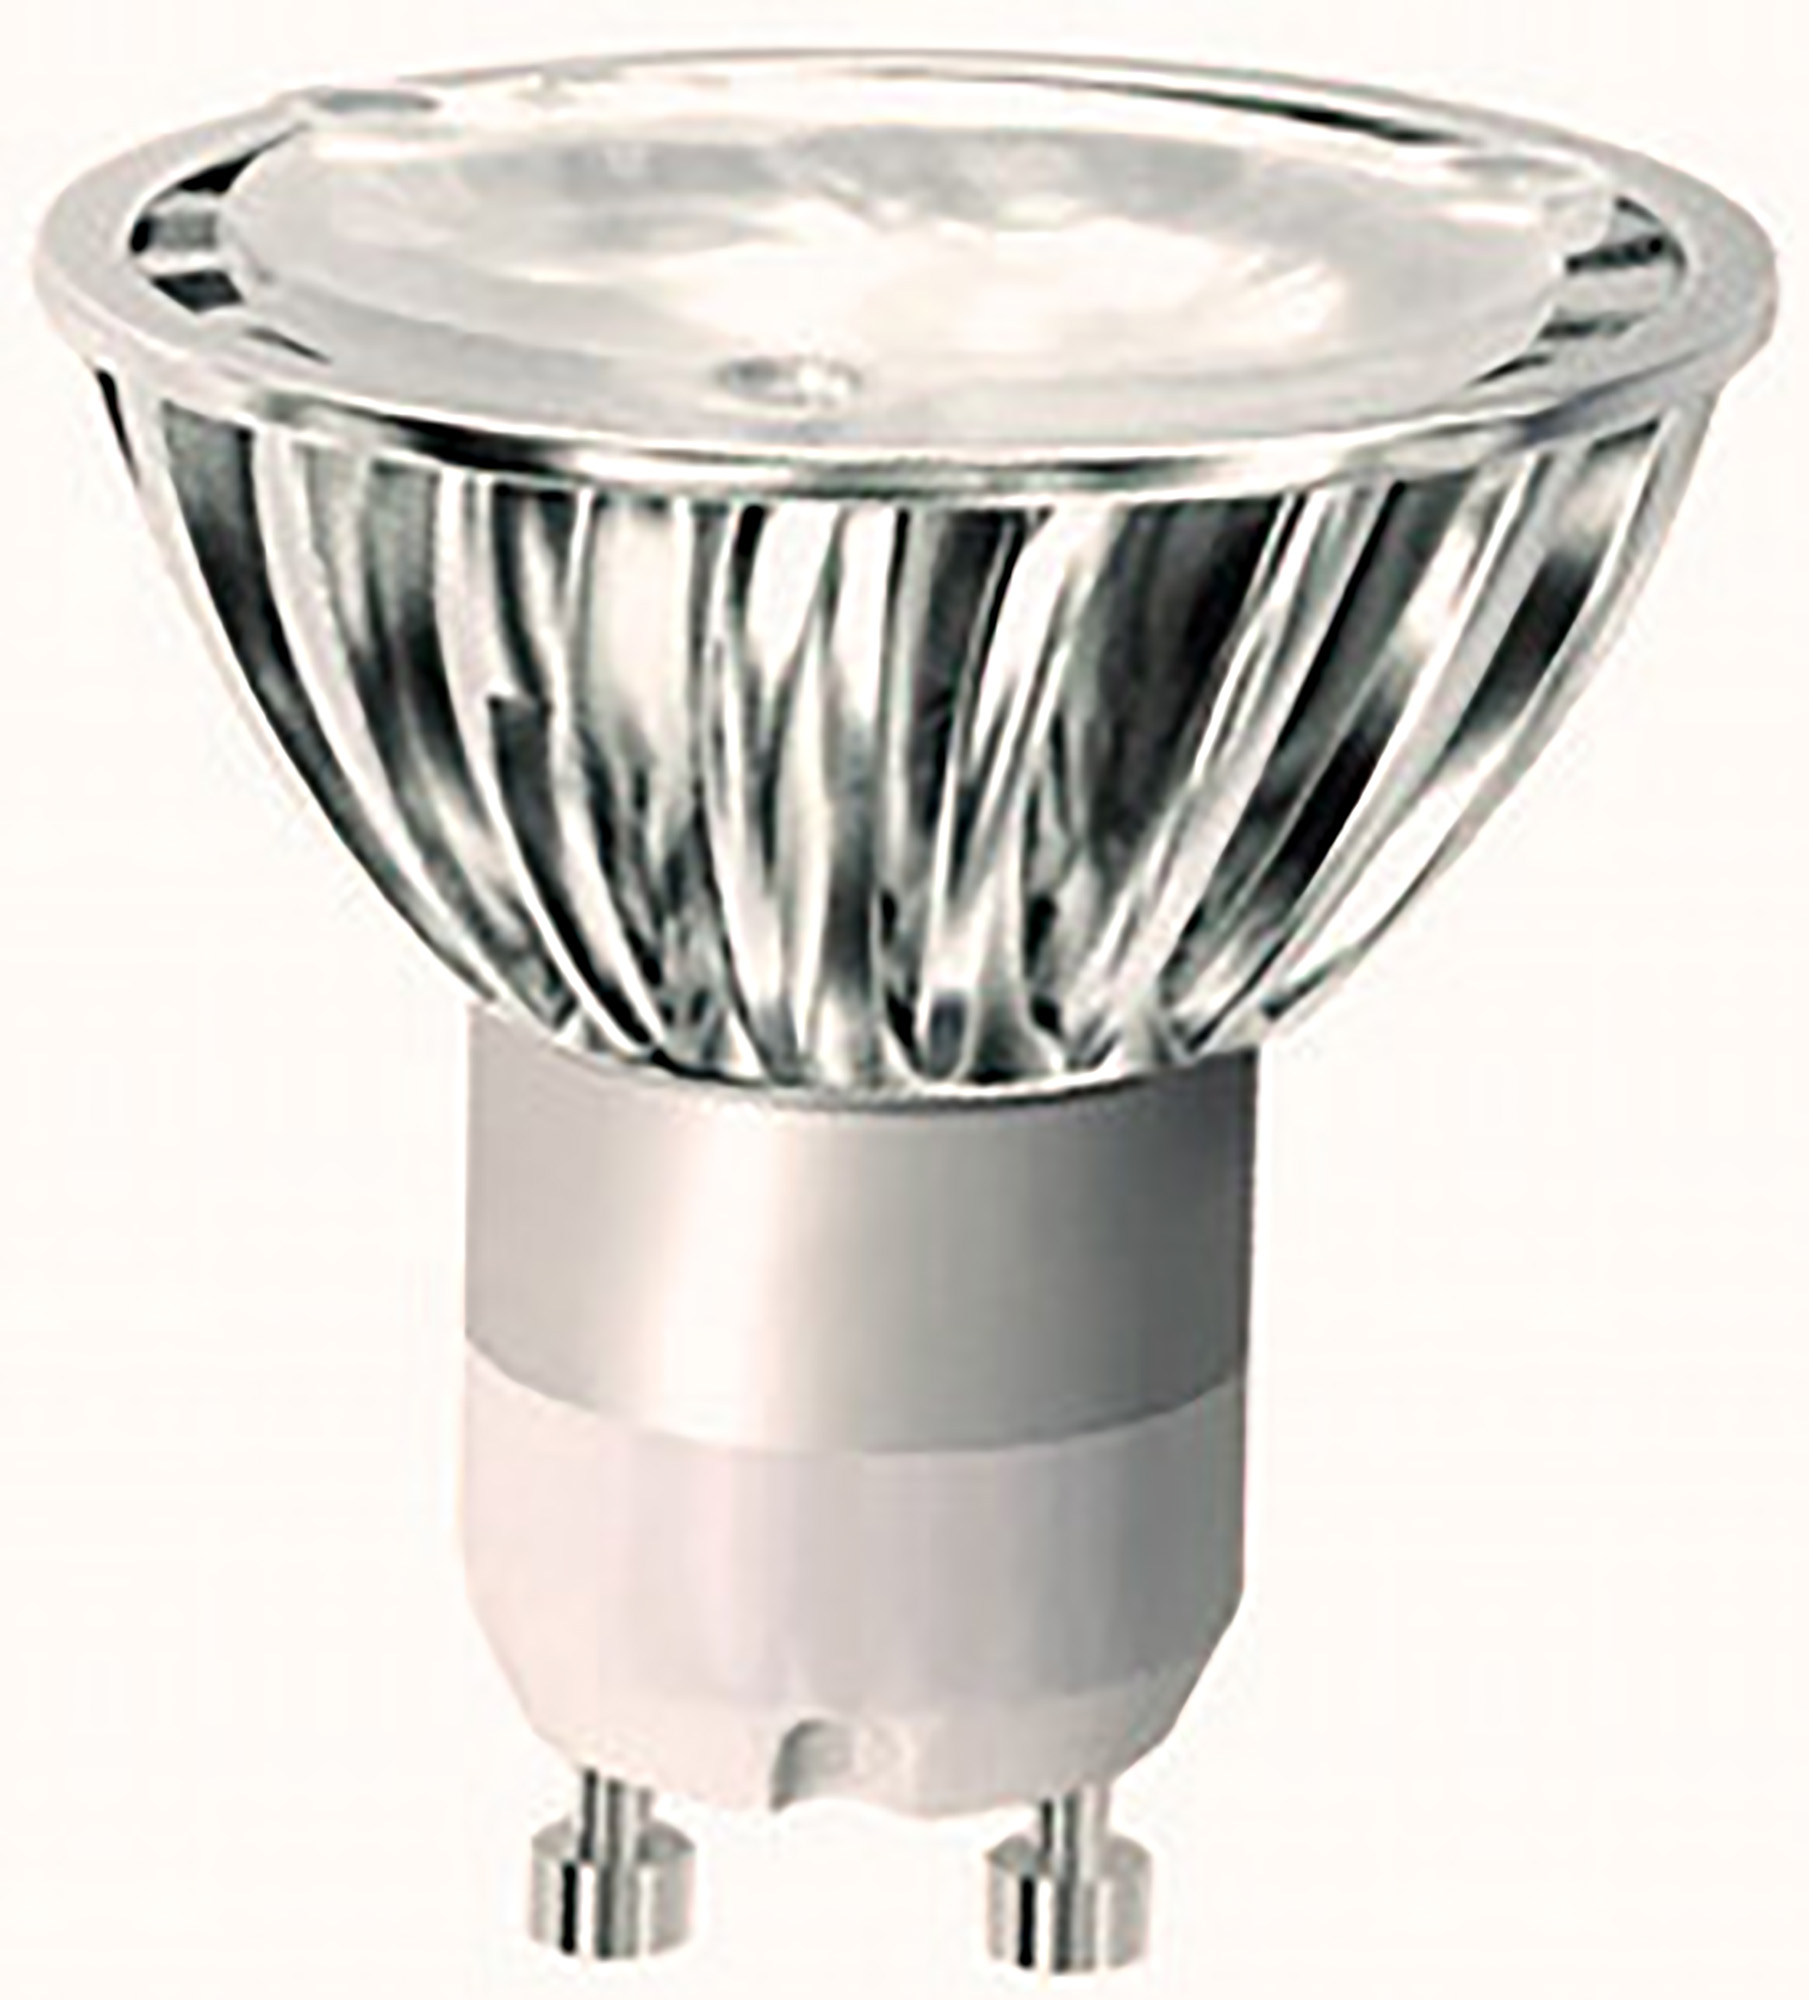 Higher Power LED LED Lamps Luxram Spot Lamps